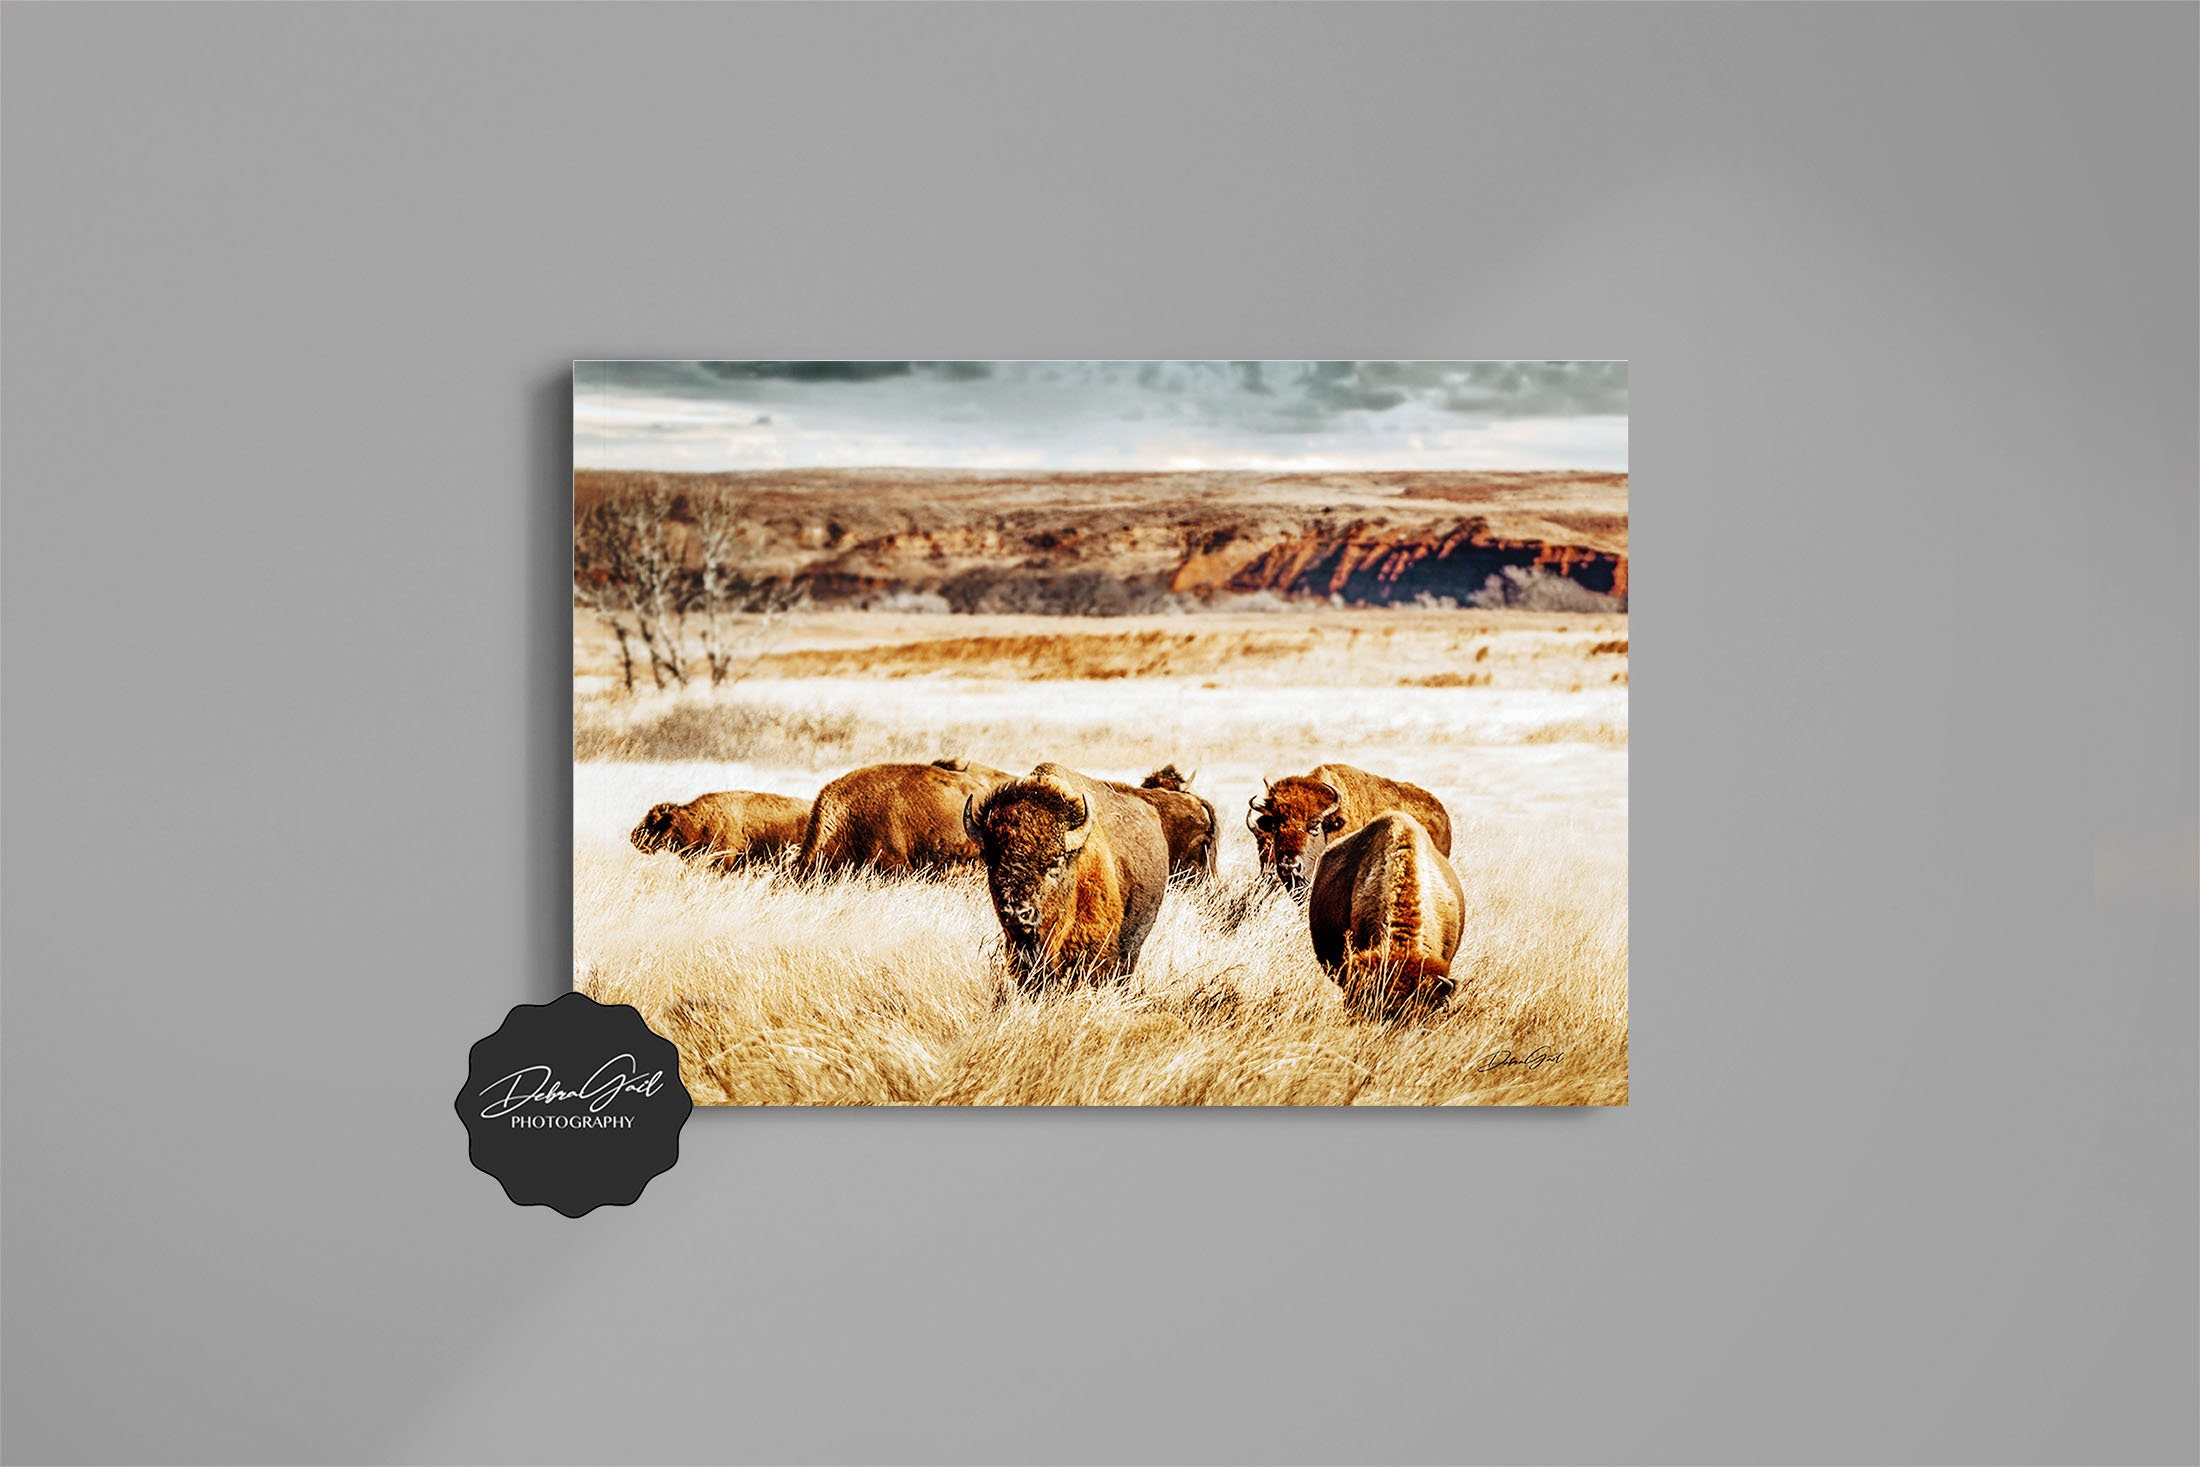 Longhorn Bull Western Decor - Debra Gail